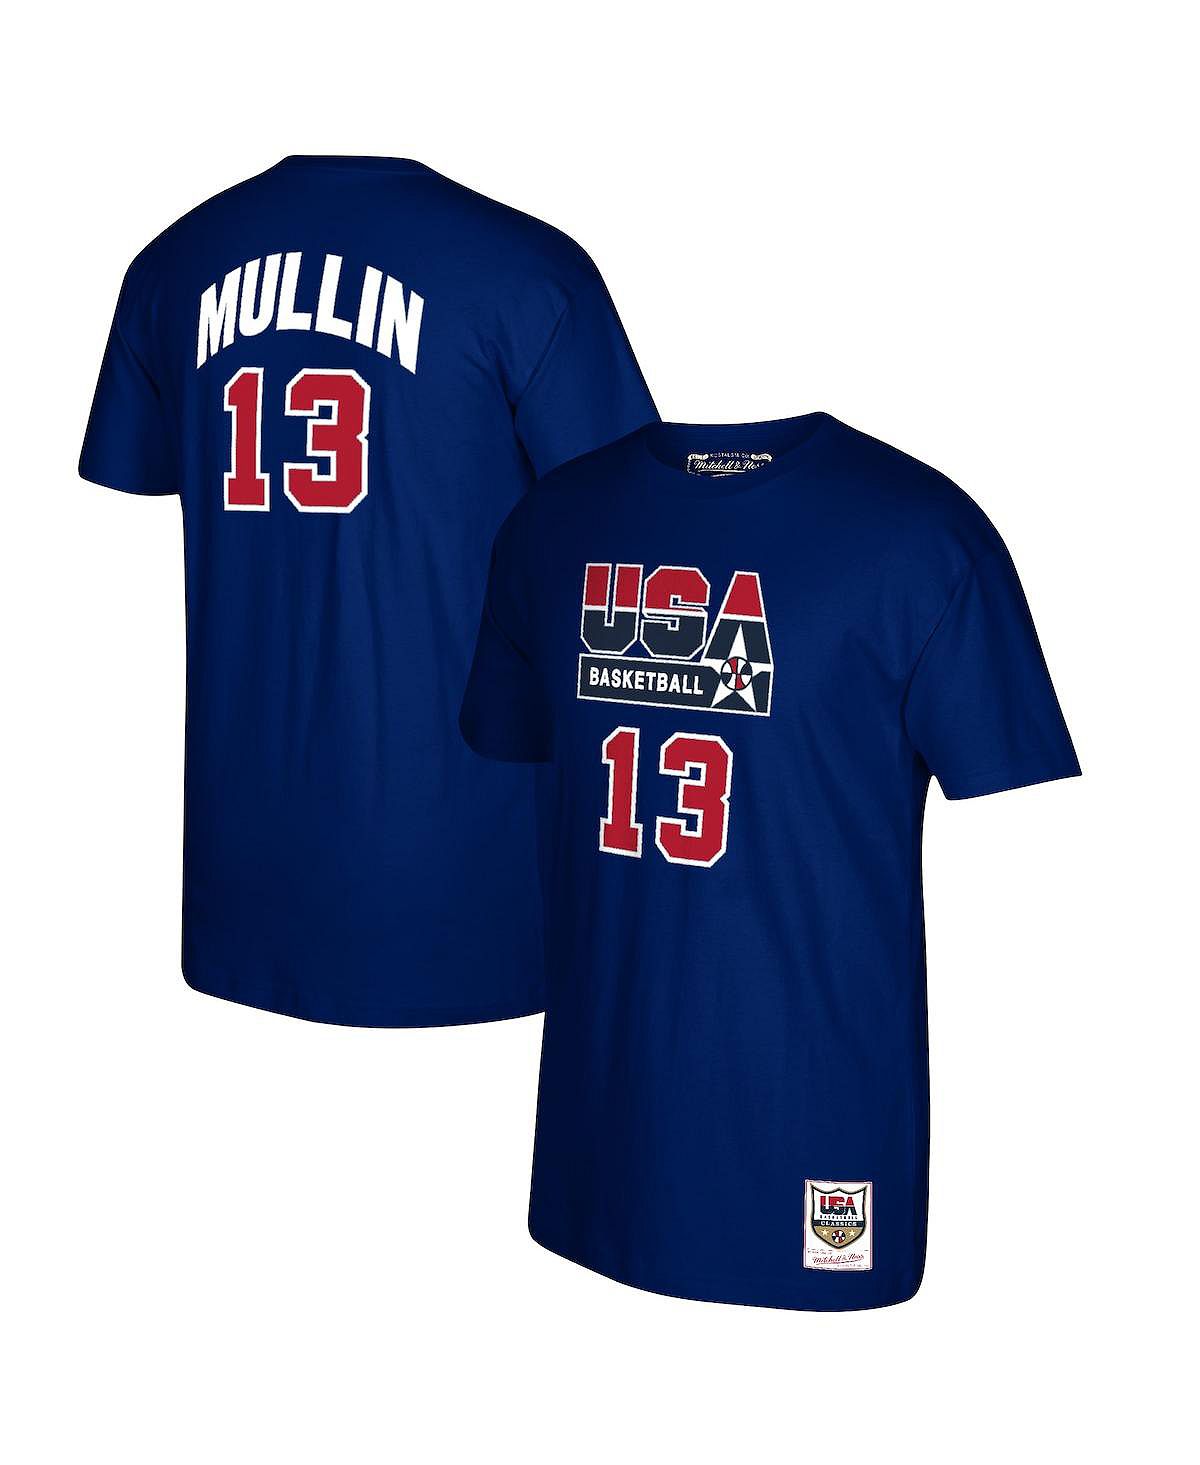 Мужская футболка chris mullin navy usa basketball 1992 dream team с названием и номером Mitchell & Ness, синий